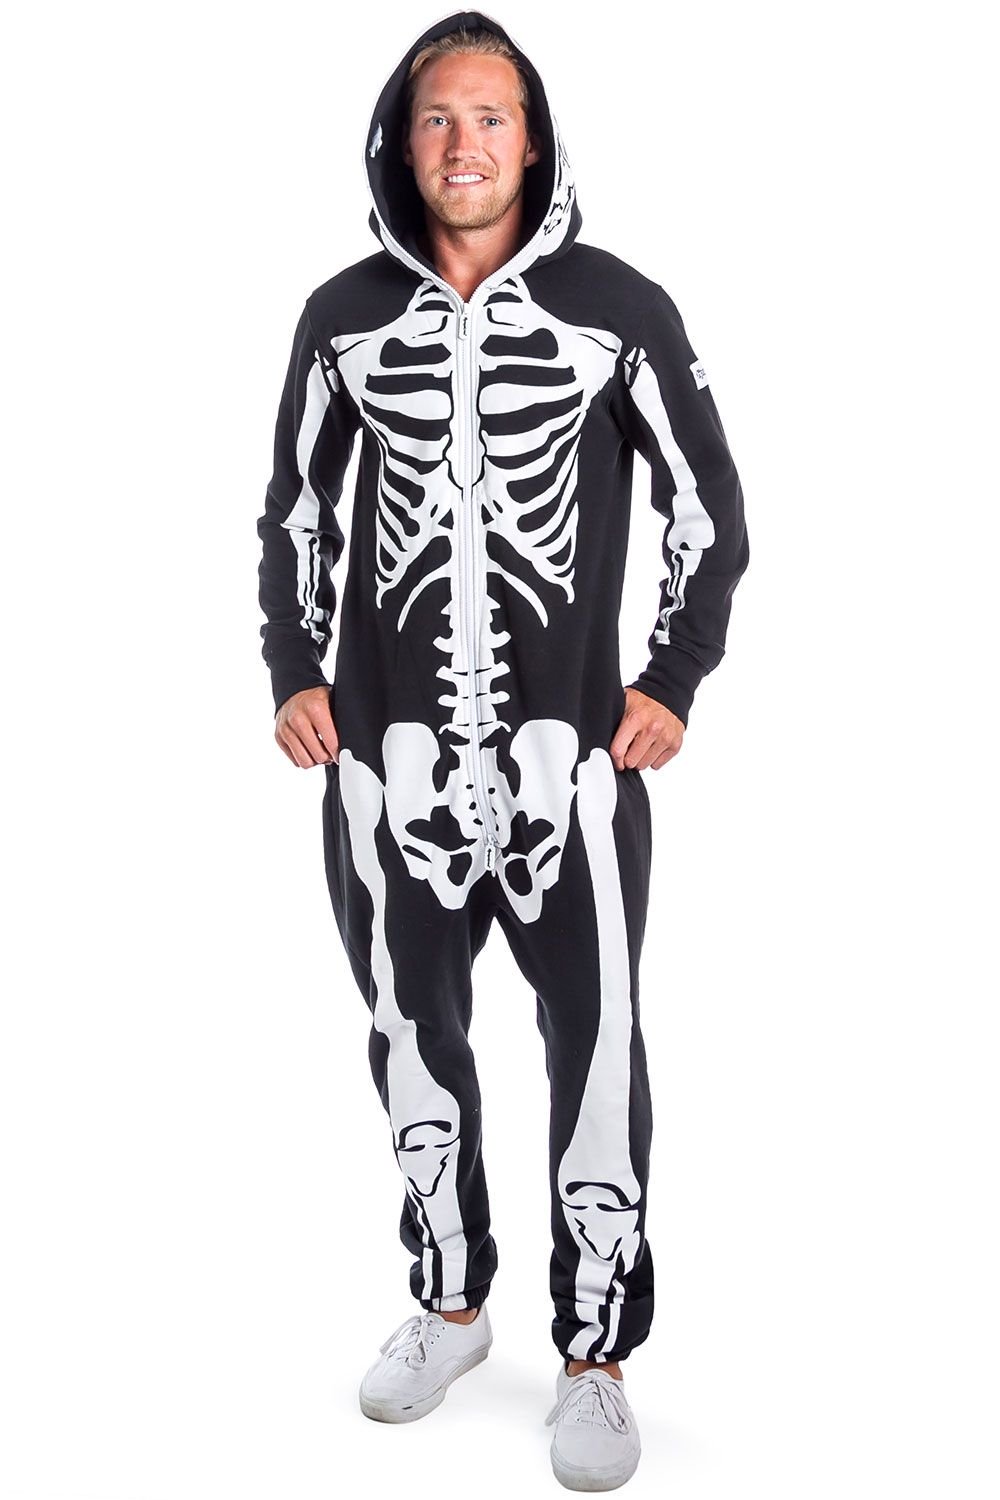 Skeleton Jumpsuit - Origin Halloween